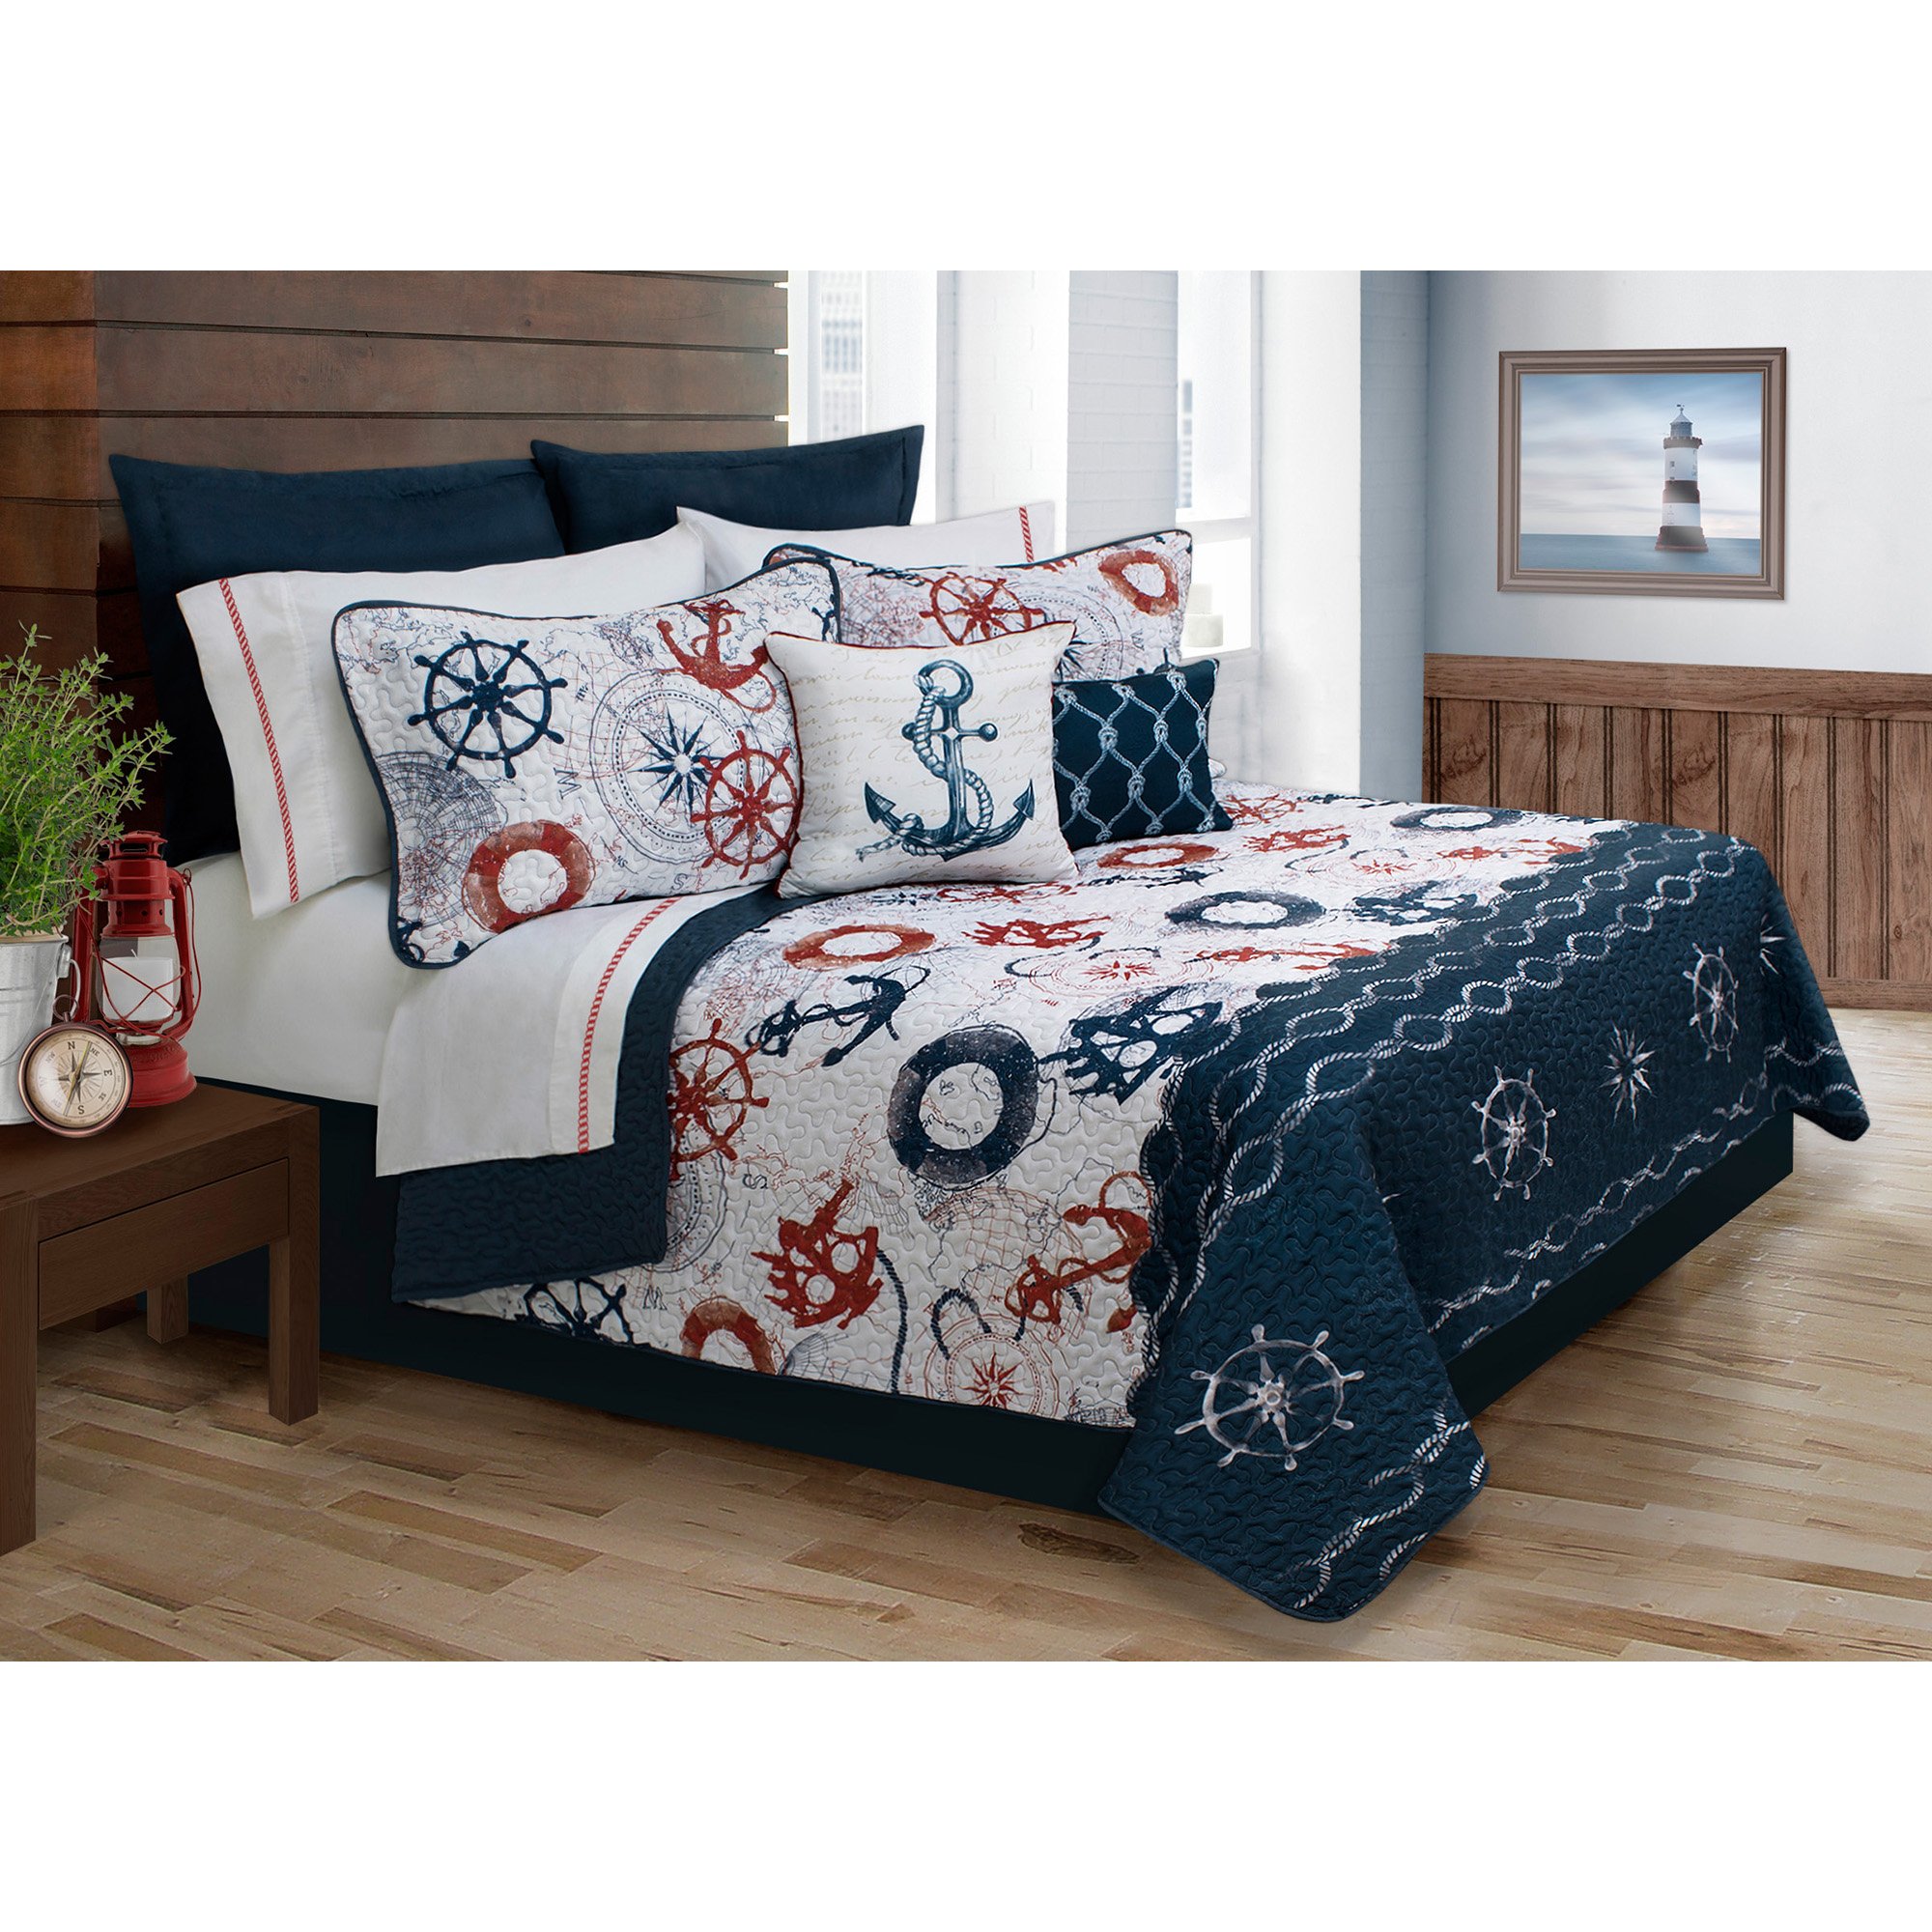 Safdie Ocean Theme Bedroom Queen Sheet Set, Full Bedspread with Shams, Blue Bedspreads Queen Size, Ocean Blues Bedding Sets & Collectio